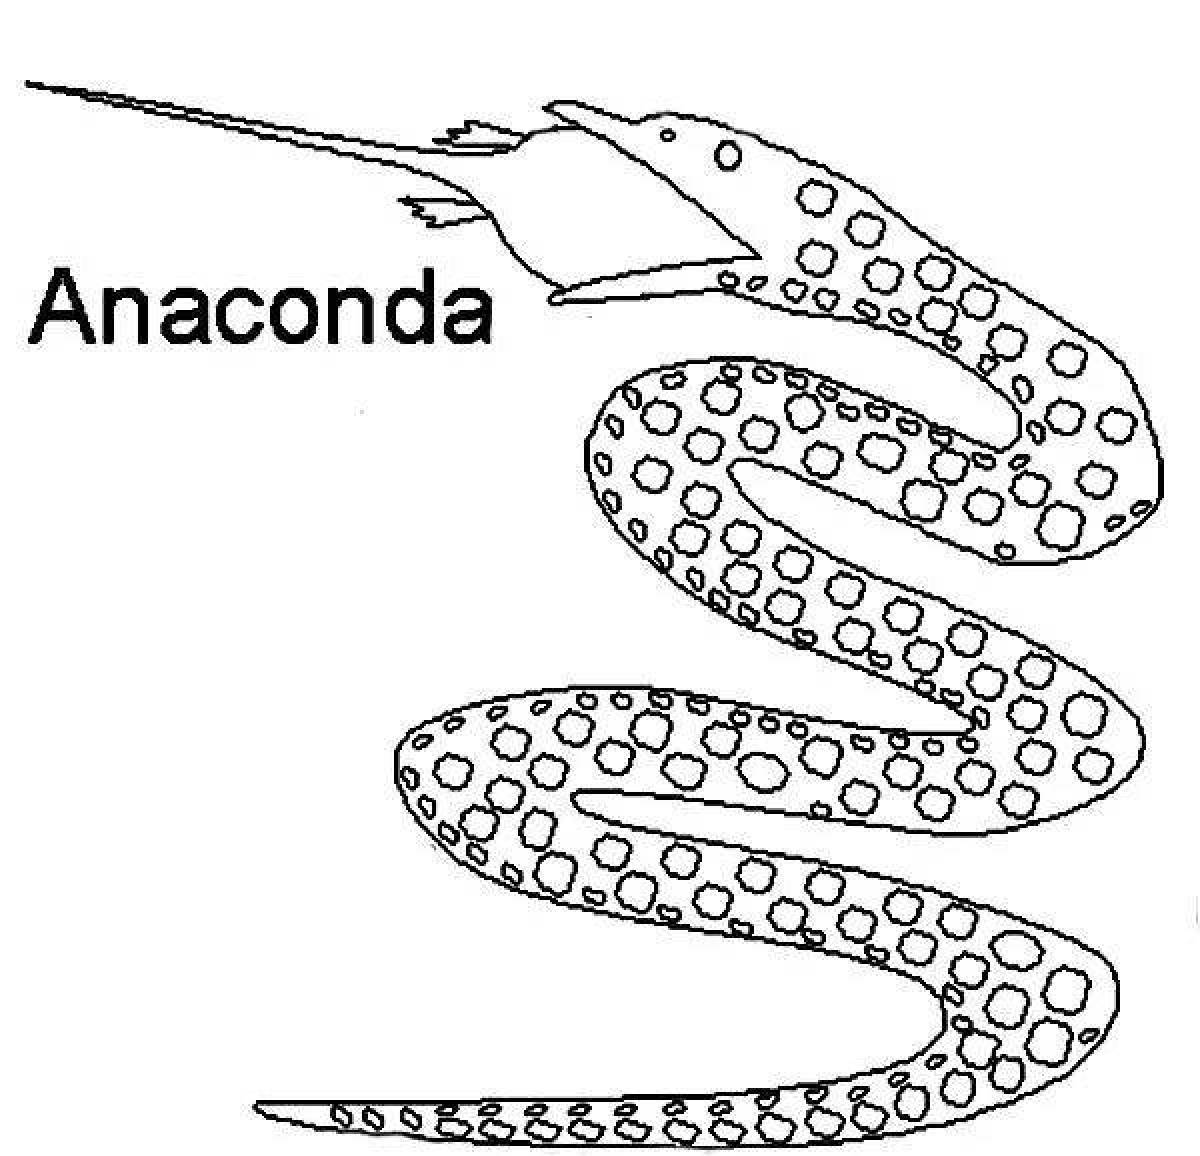 Awesome anaconda coloring book